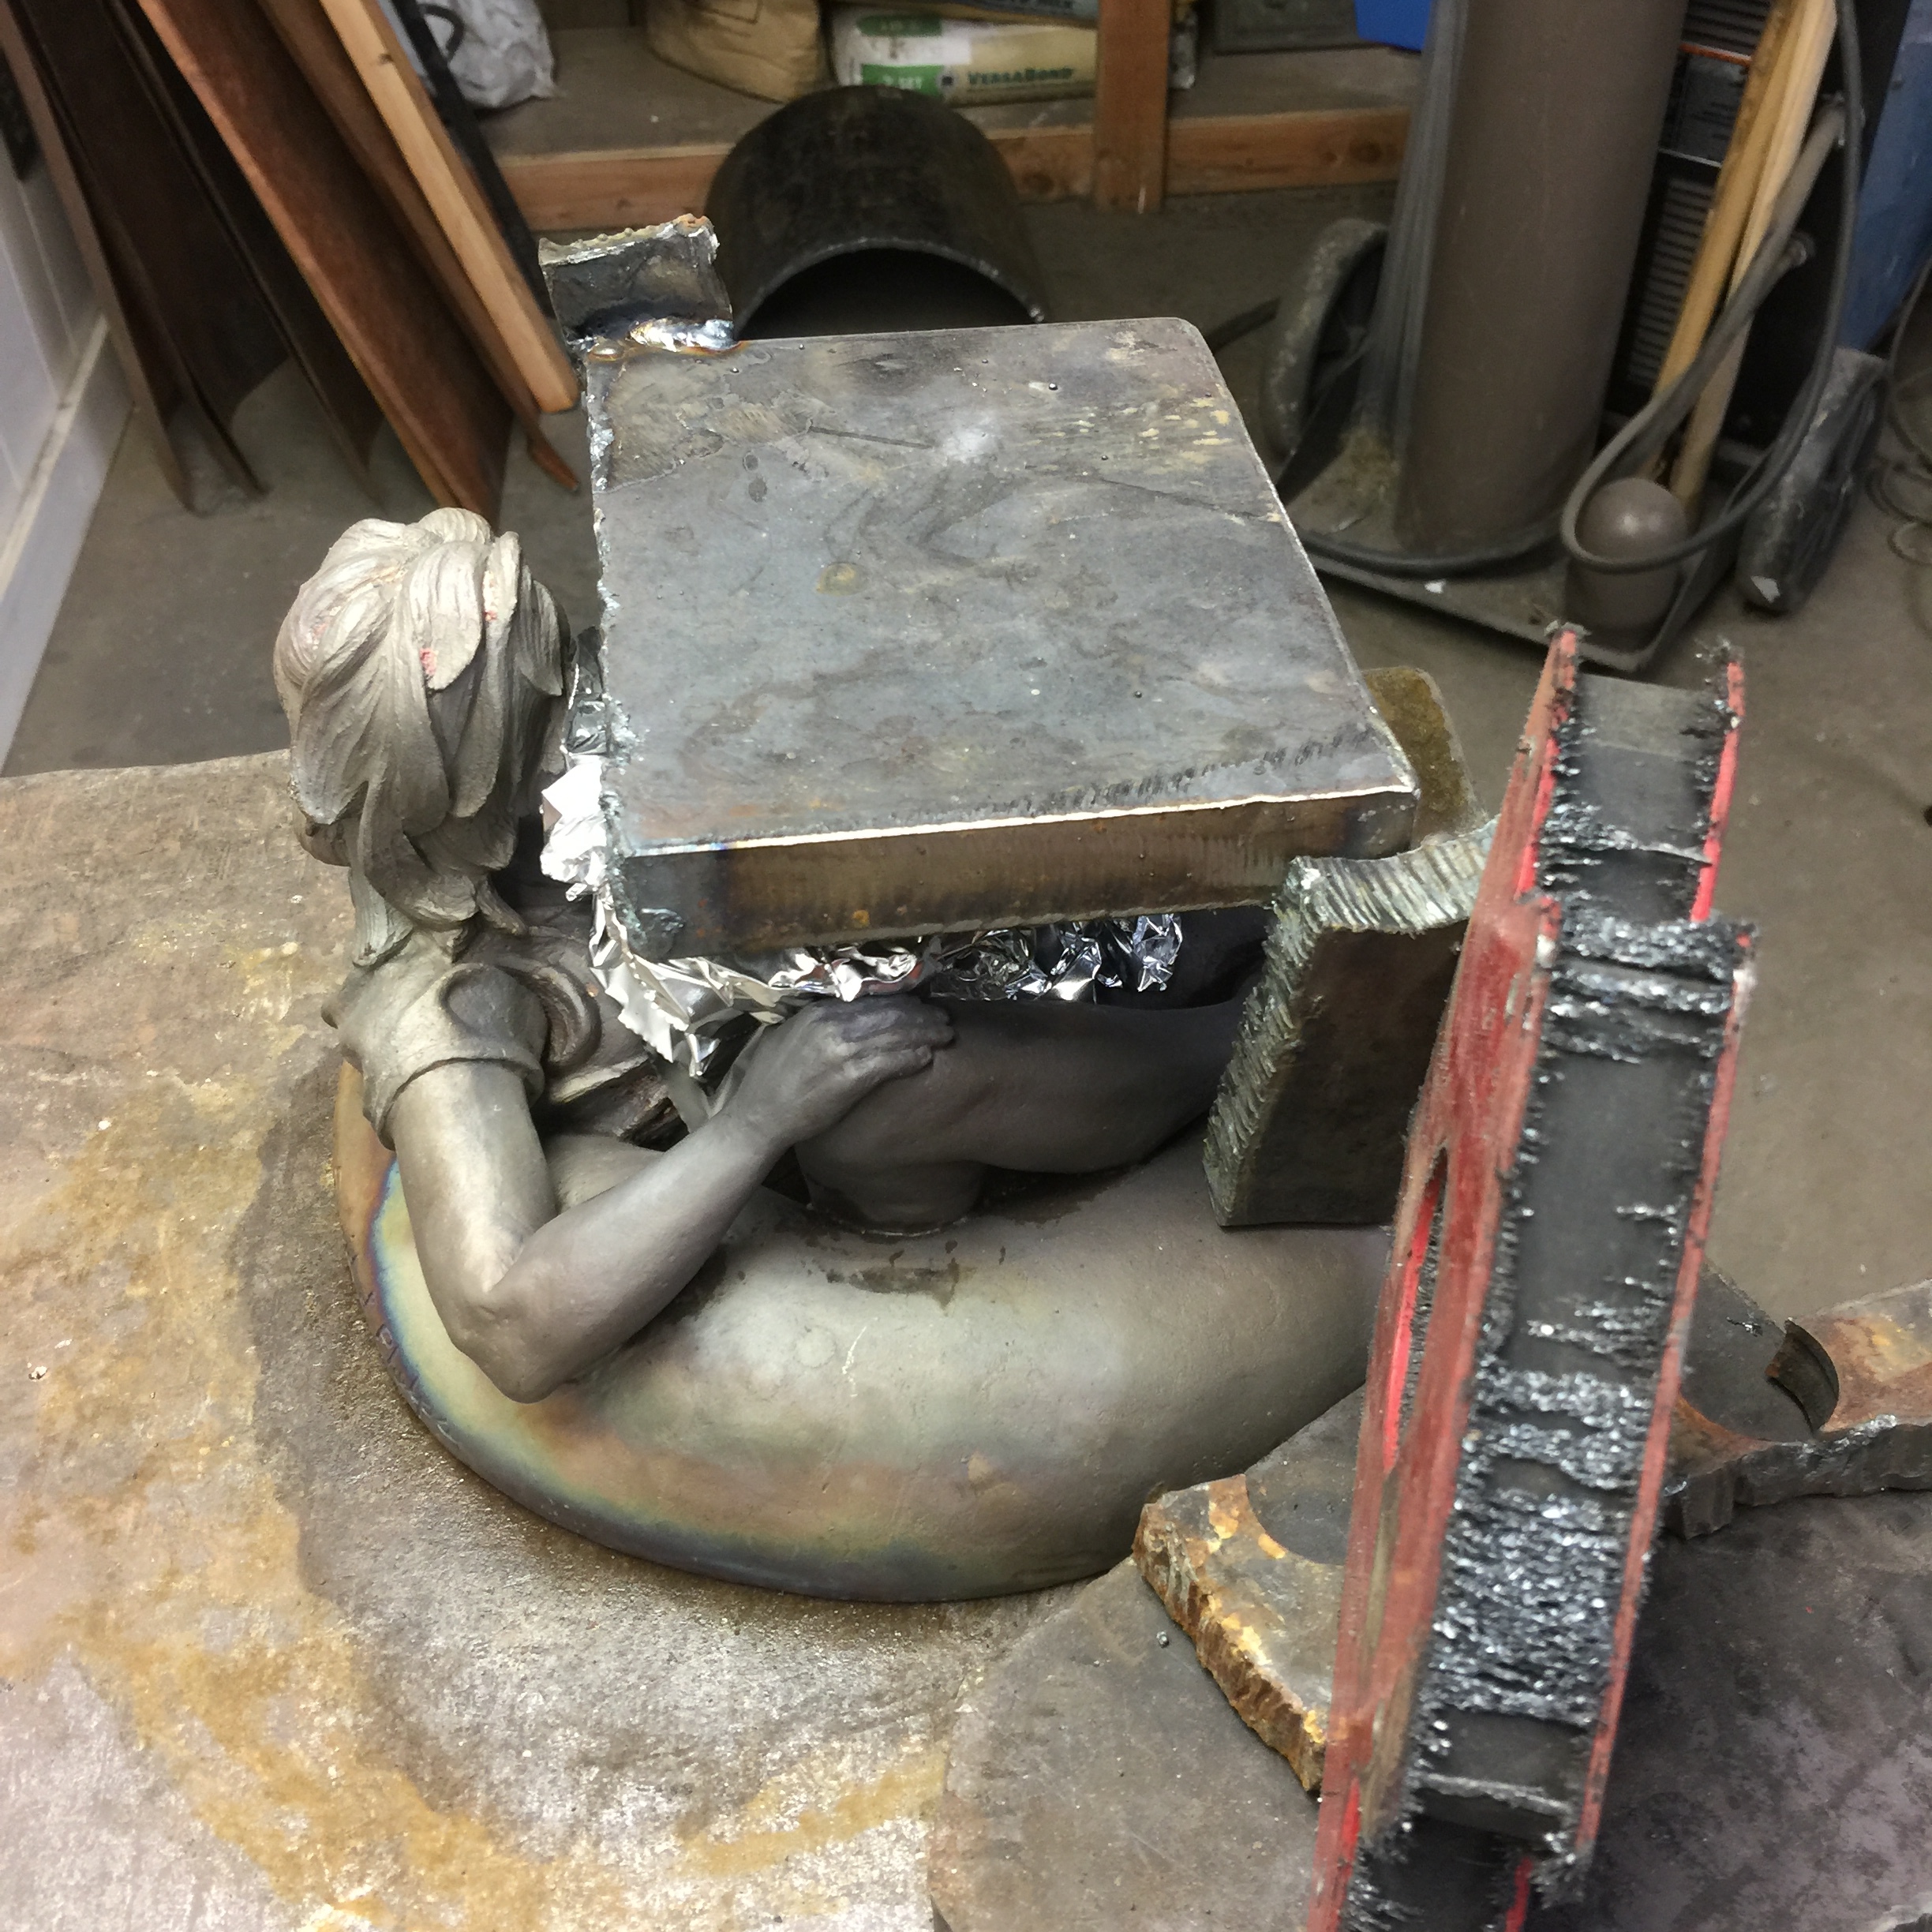  Building a tool to flatten the sculpture 